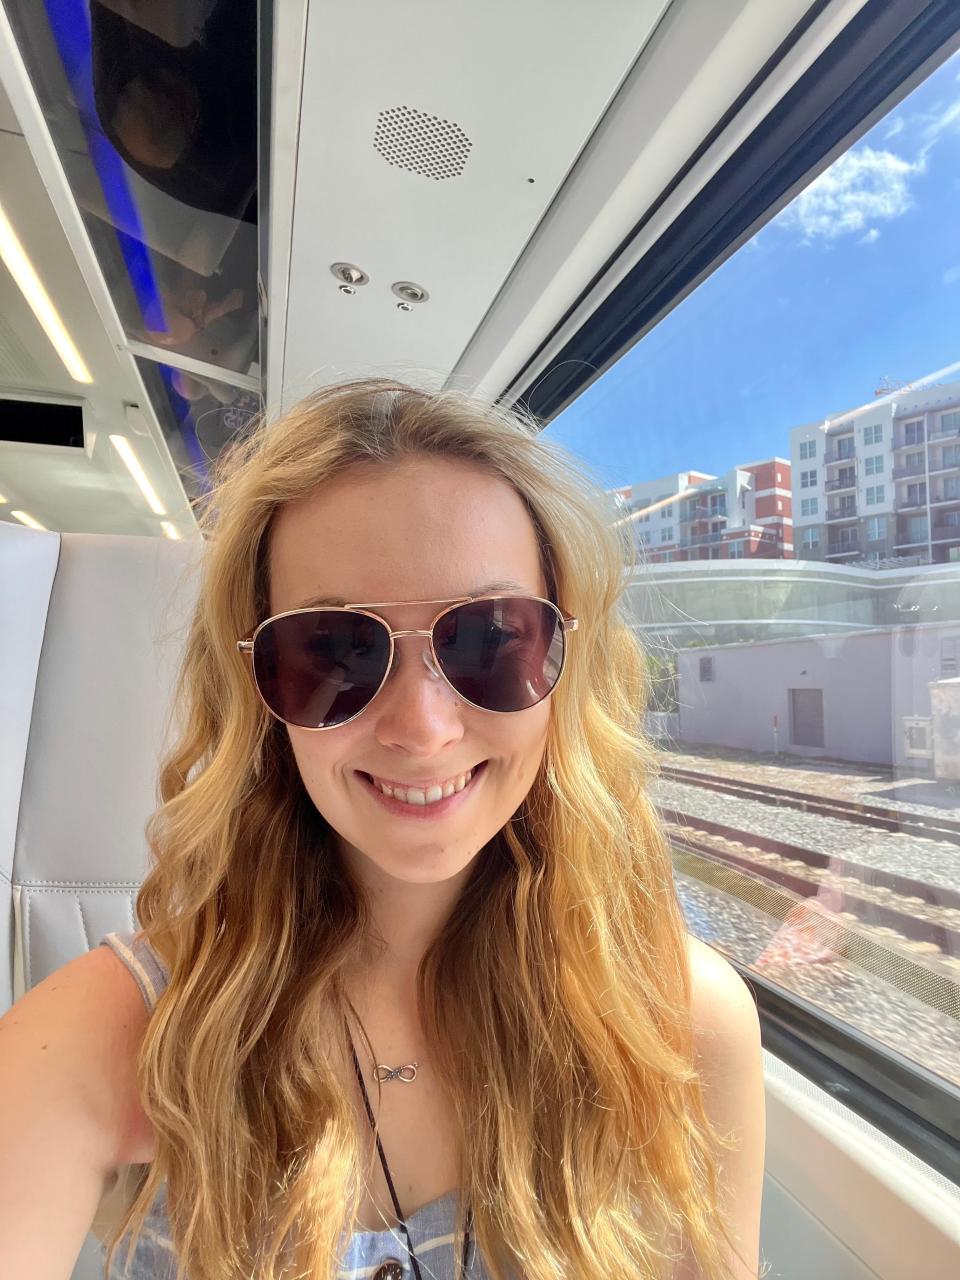 A woman wearing aviator sunglasses is shown inside a Brightline train car.